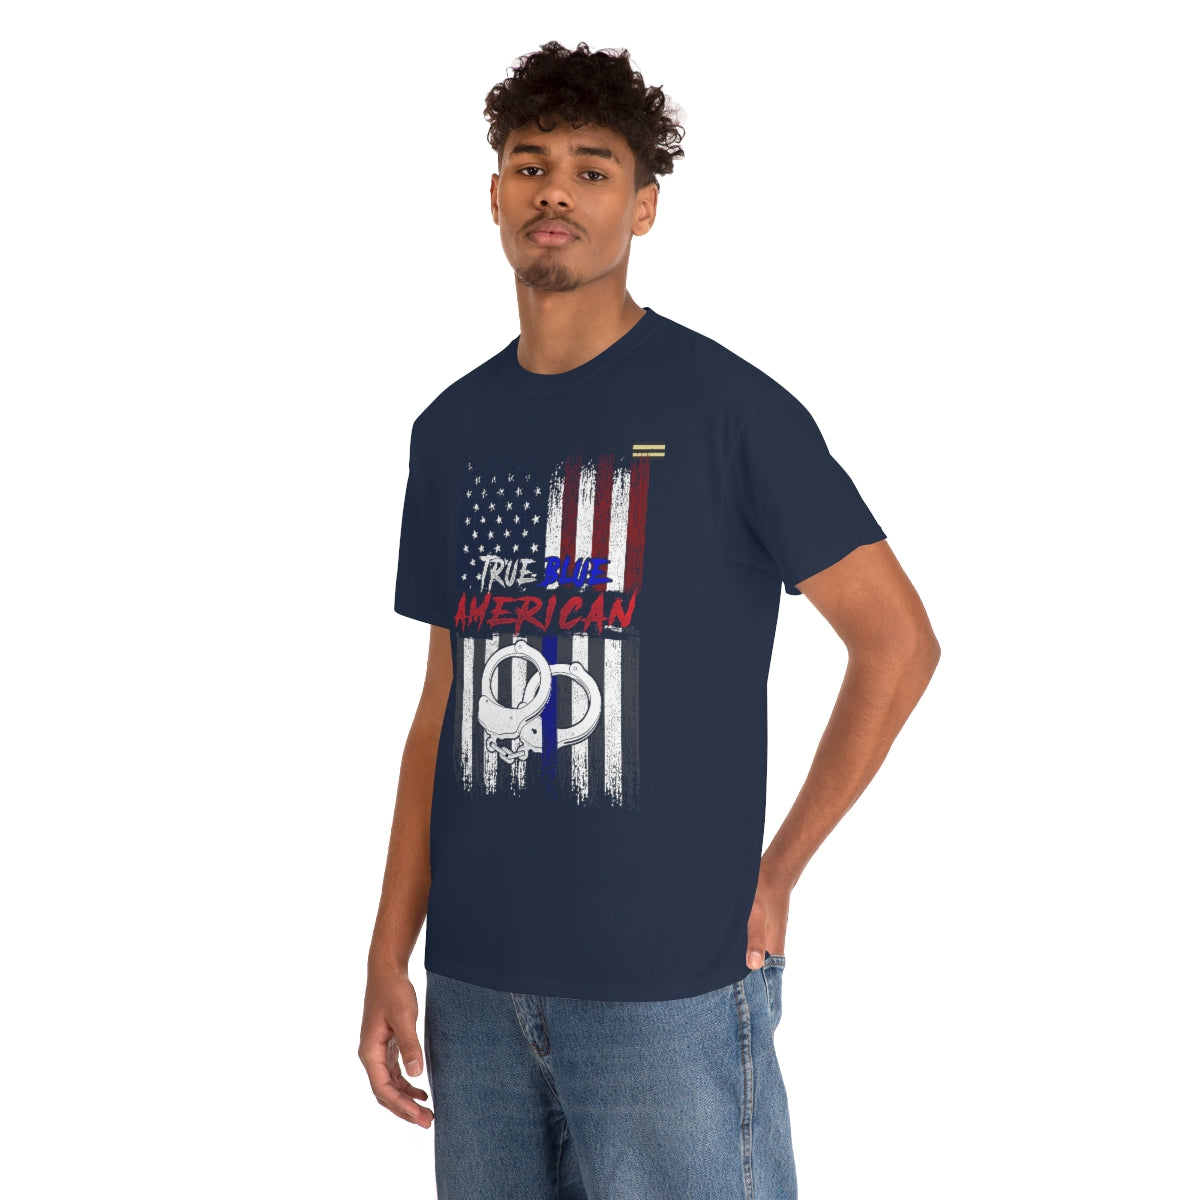 True Blue American  Law Enforcement Shirt